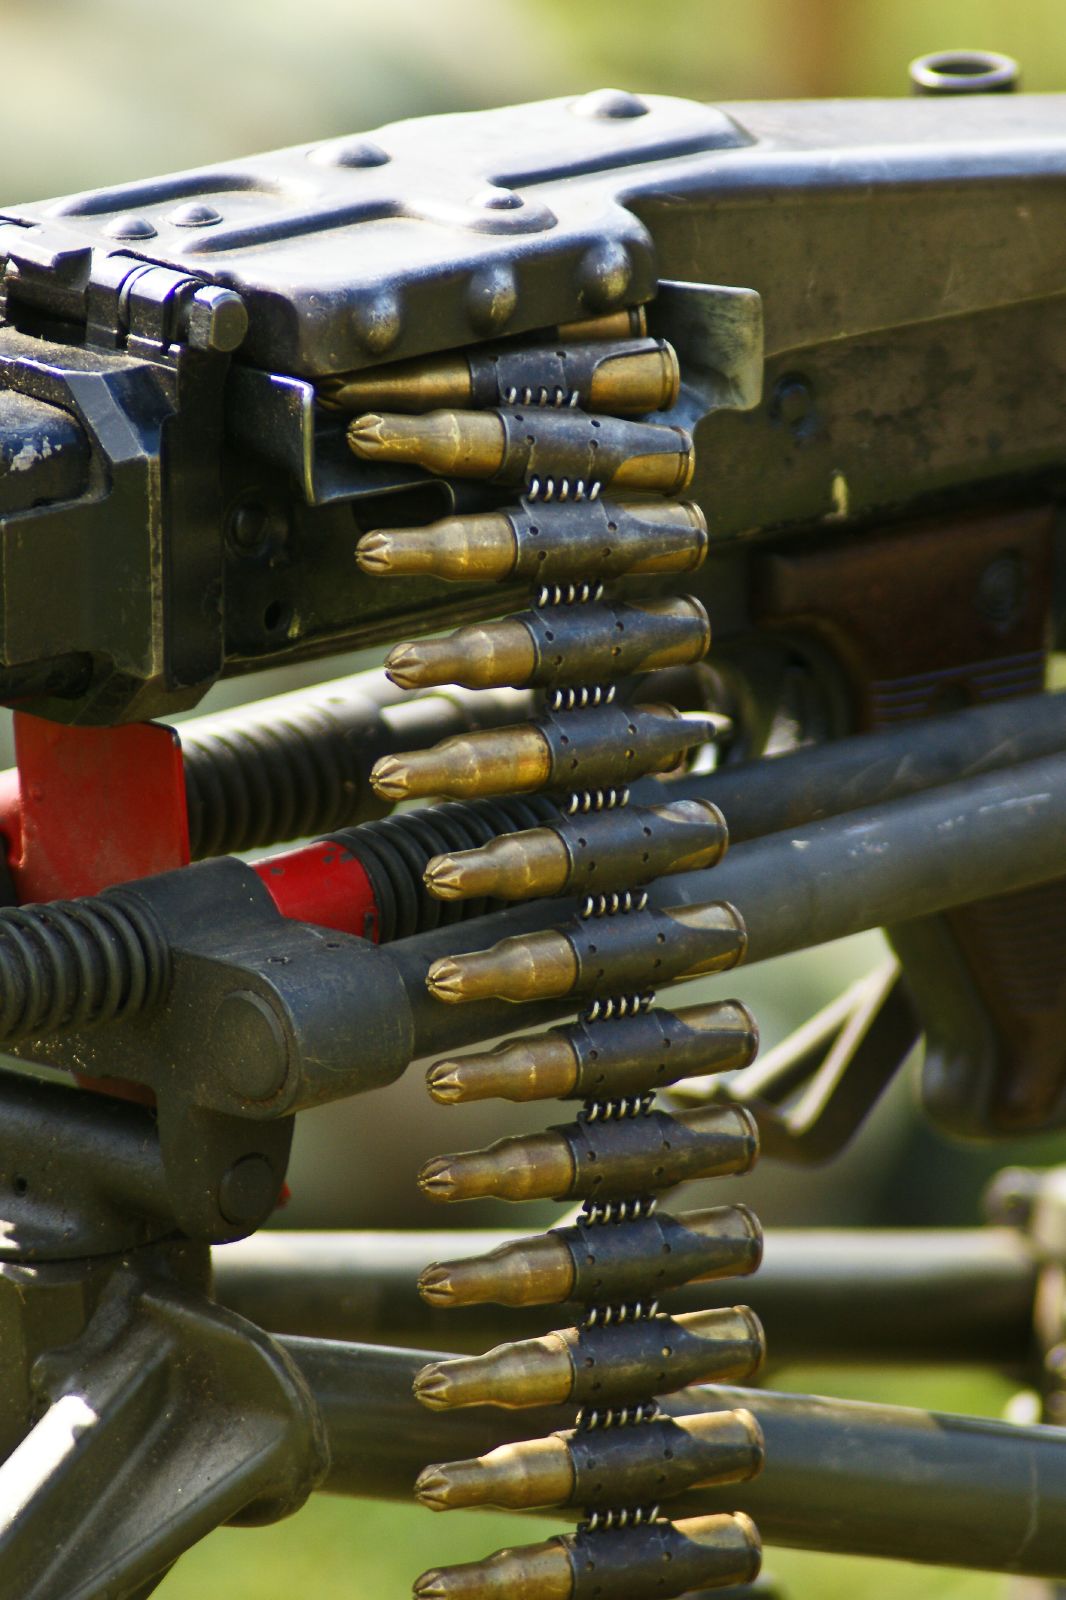 Belt of Cartridges for Machine Gun. German MG 42. Stock Photo